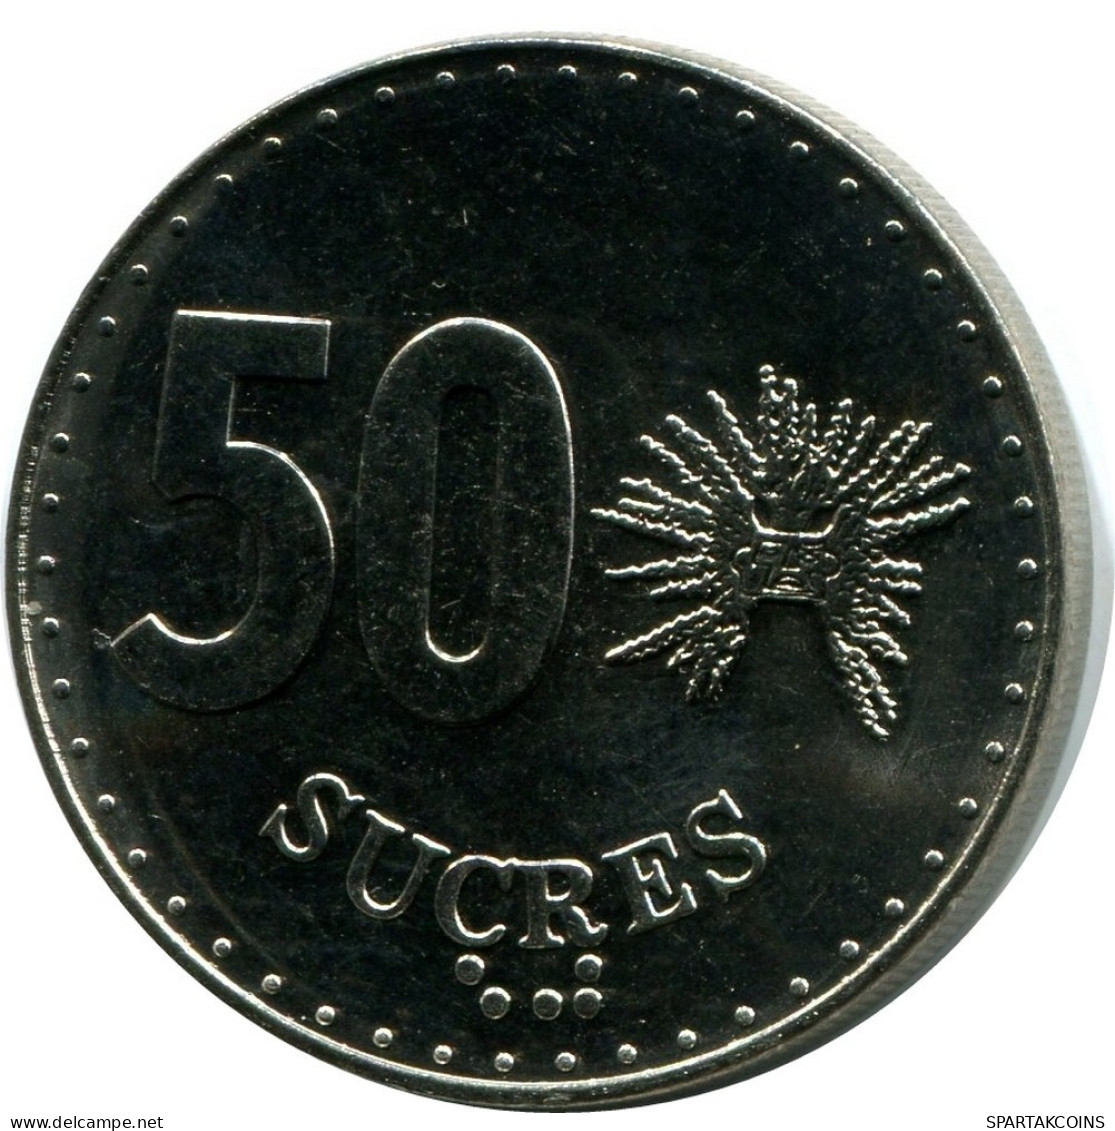 50 SUCRE 1991 ECUADOR UNC Coin #M10153.U.A - Equateur